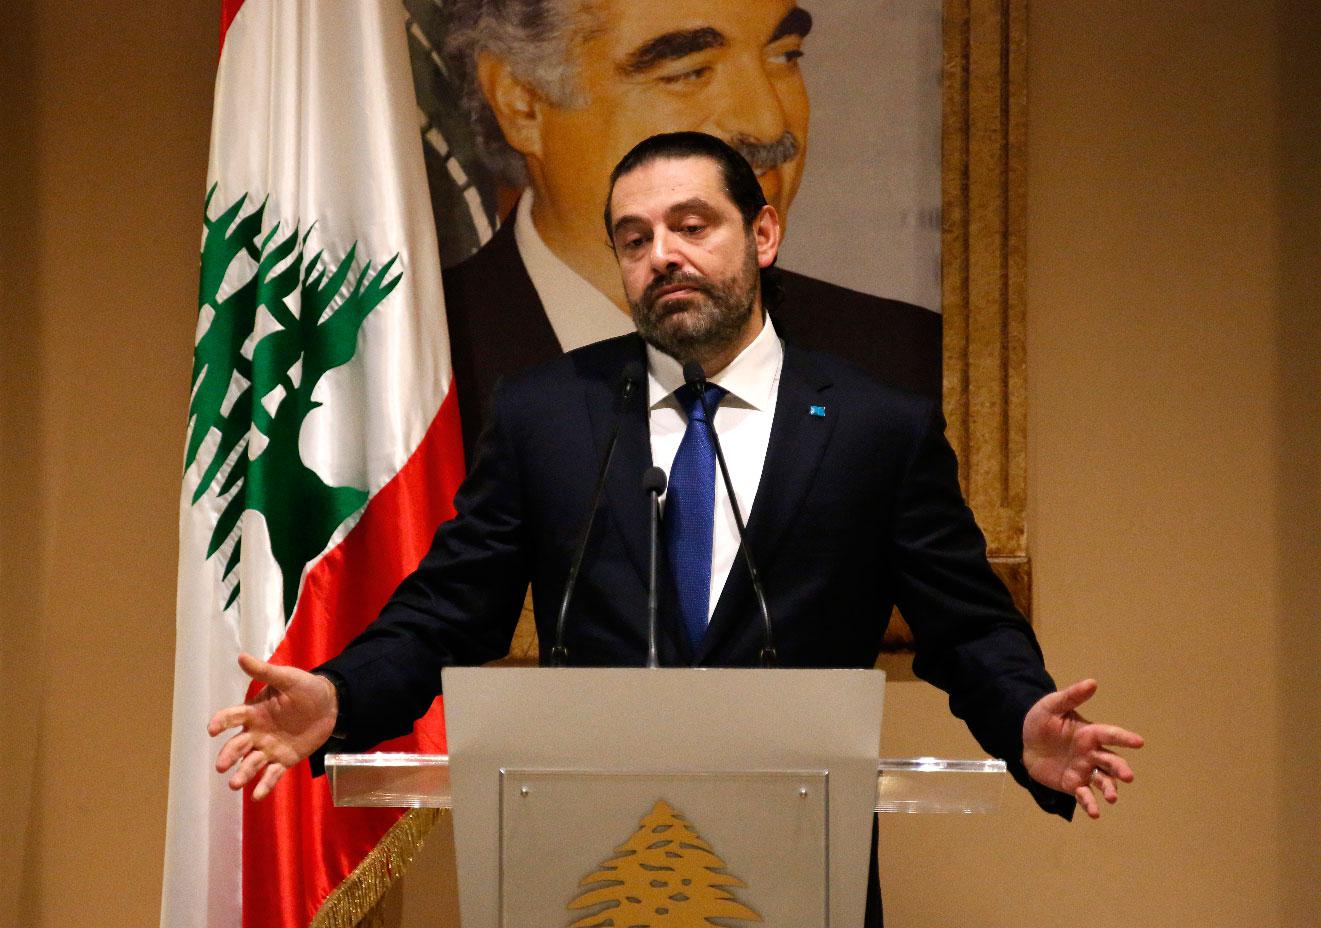 Lebanese Prime Minister-designate Saad Hariri, gestures during a press conference, in Beirut, Lebanon, Tuesday, Nov. 13, 2018.